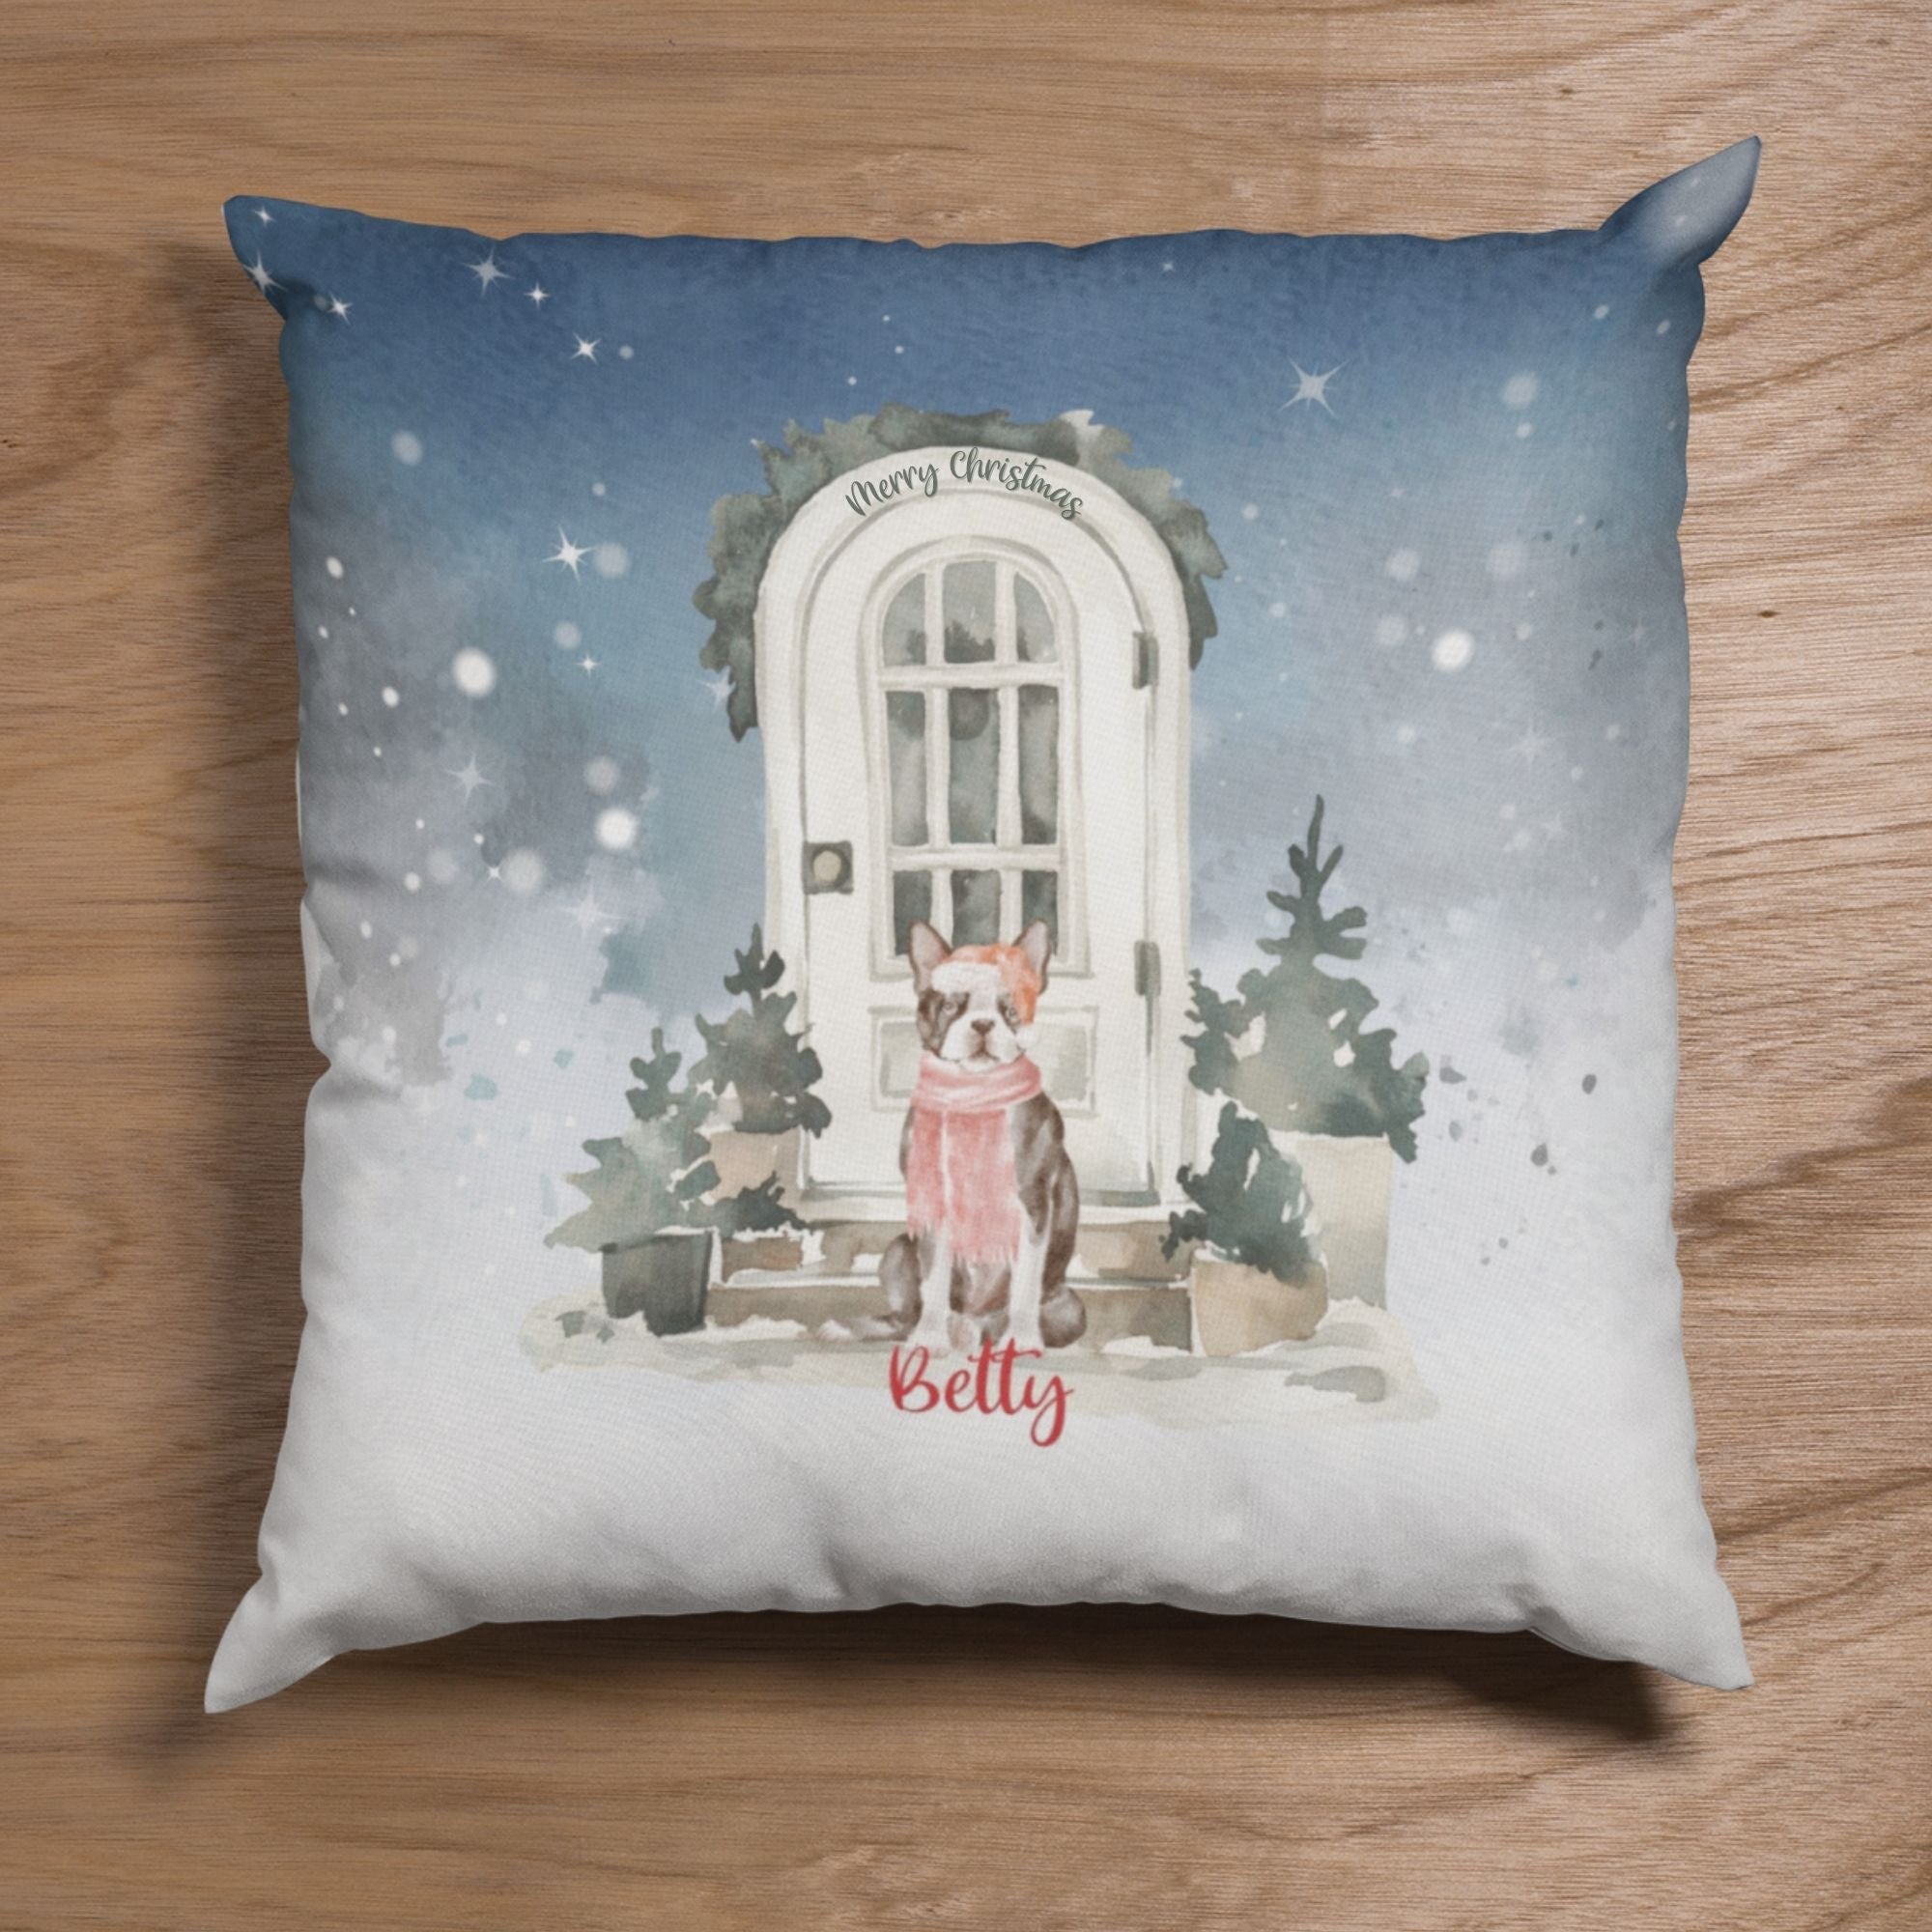 Personalised Christmas Cushion - Sweetie